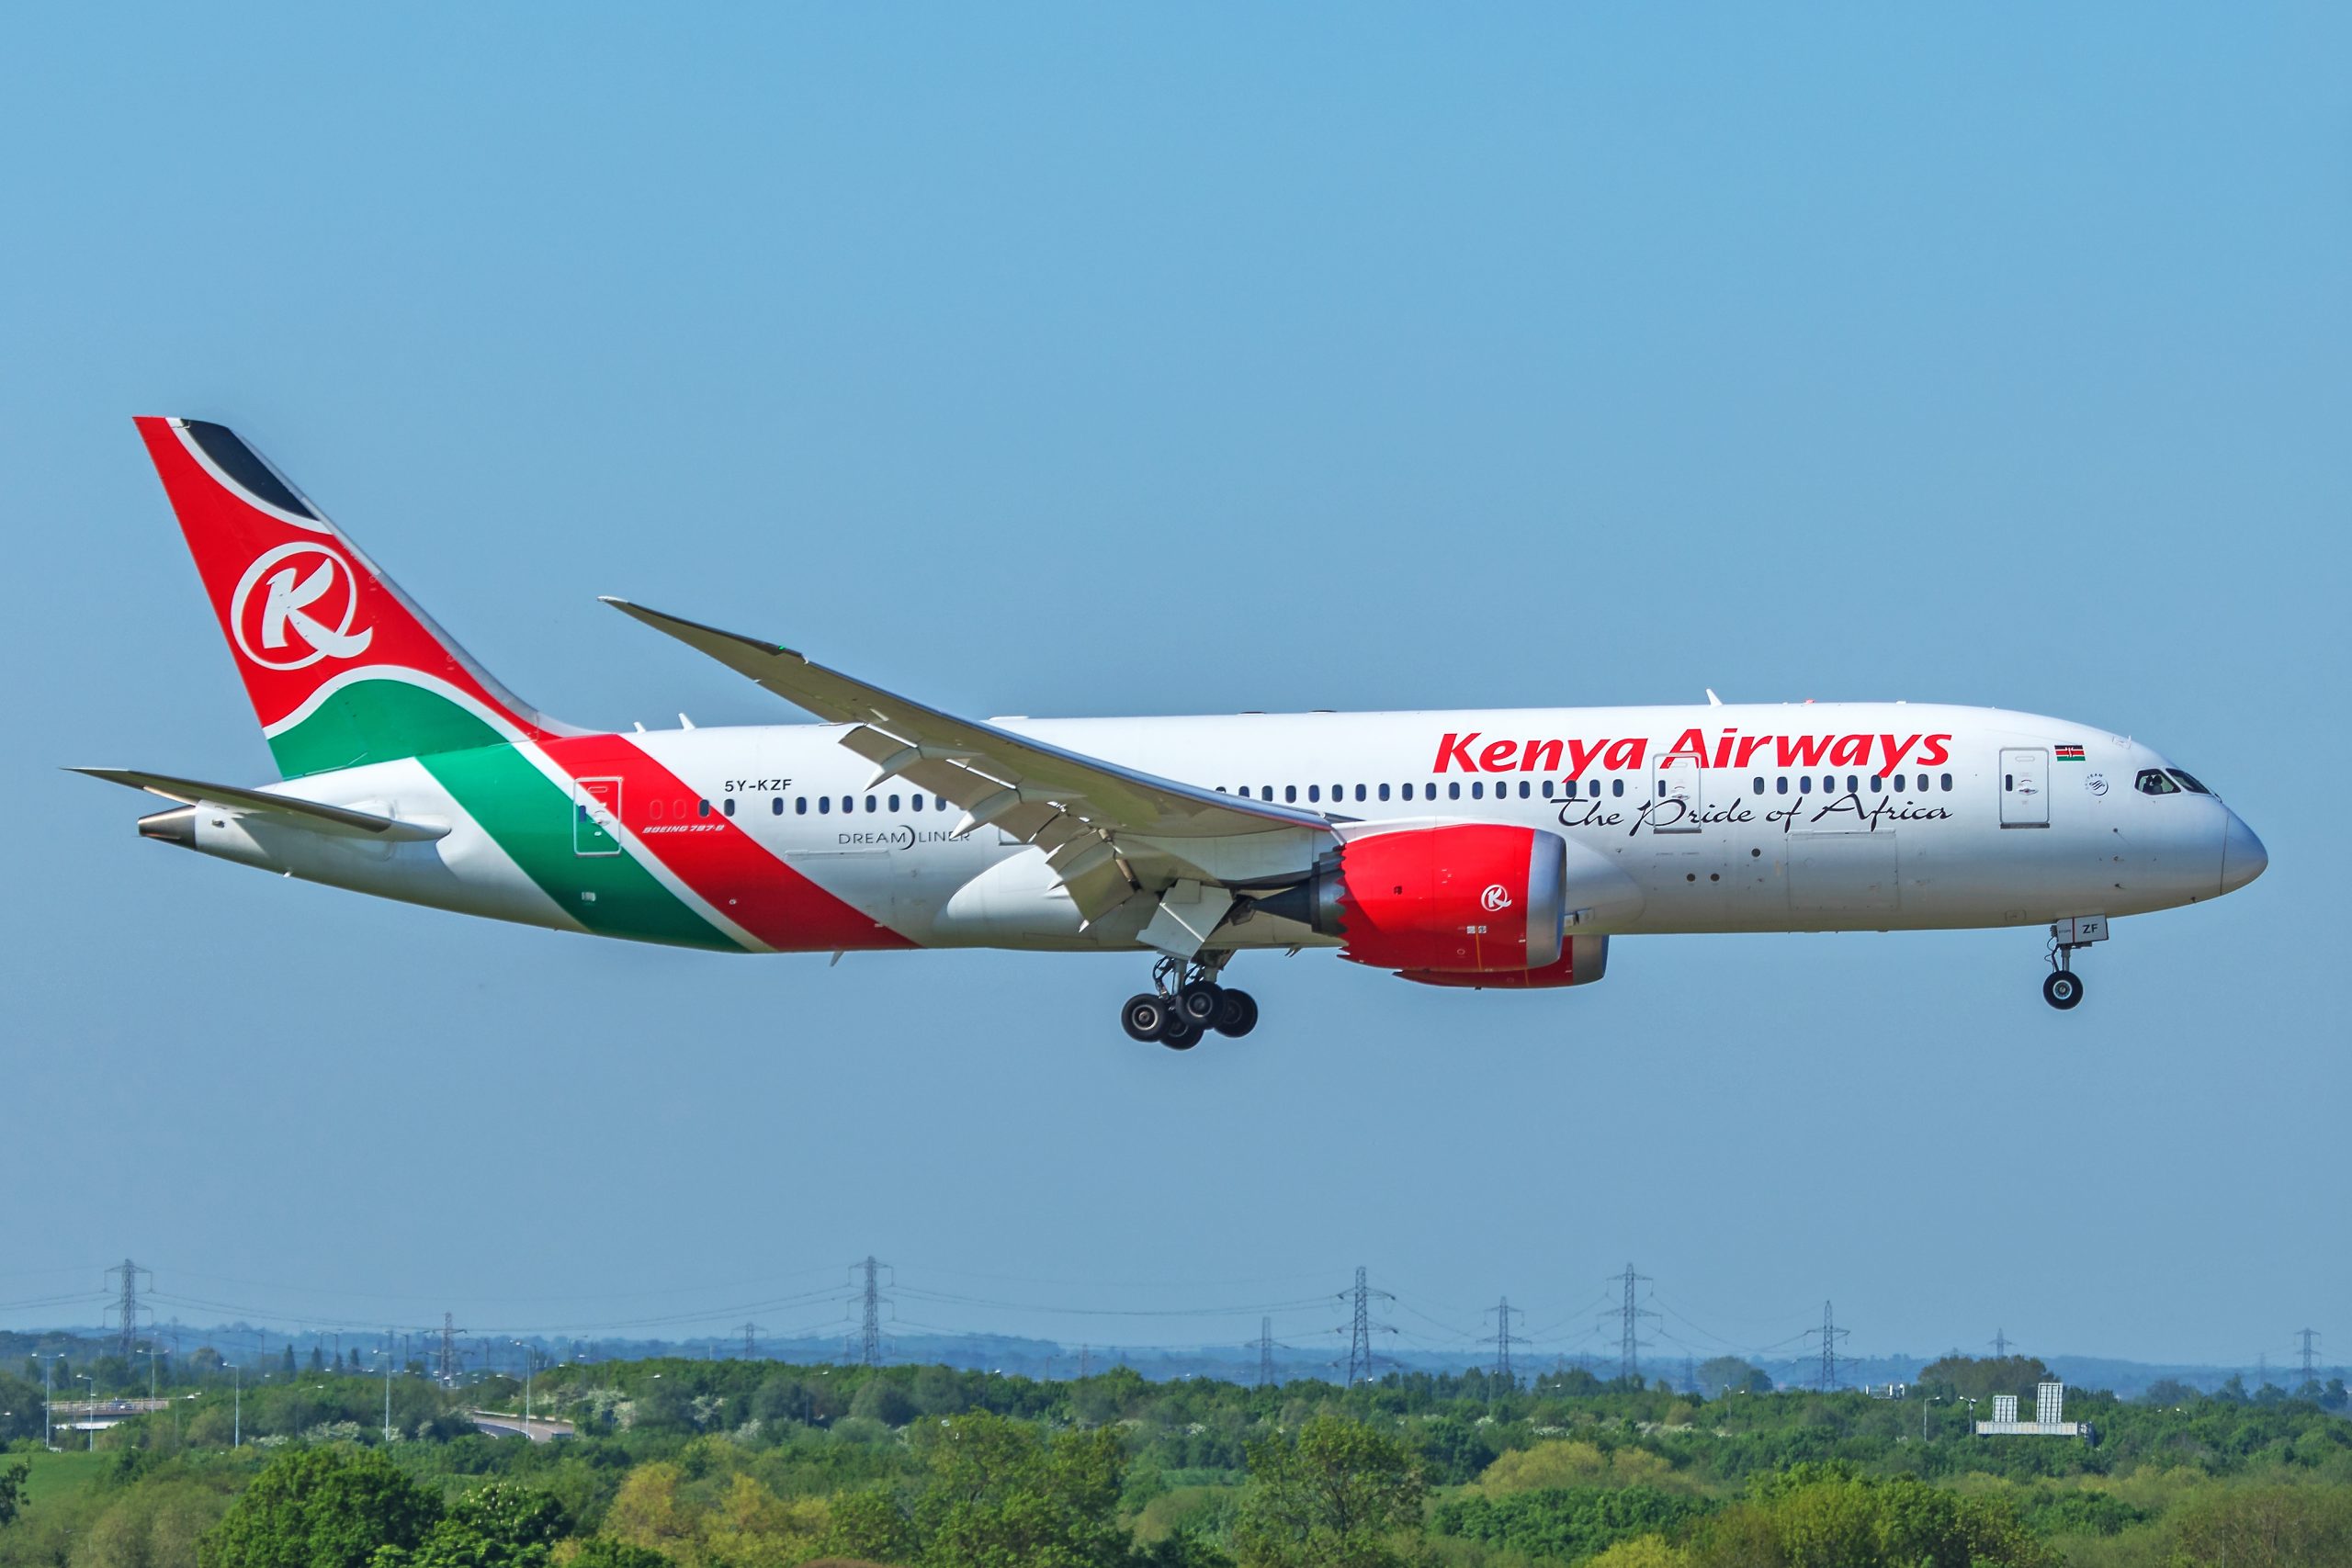 South African Airways, Kenya Airways Sign Strategic Partnership